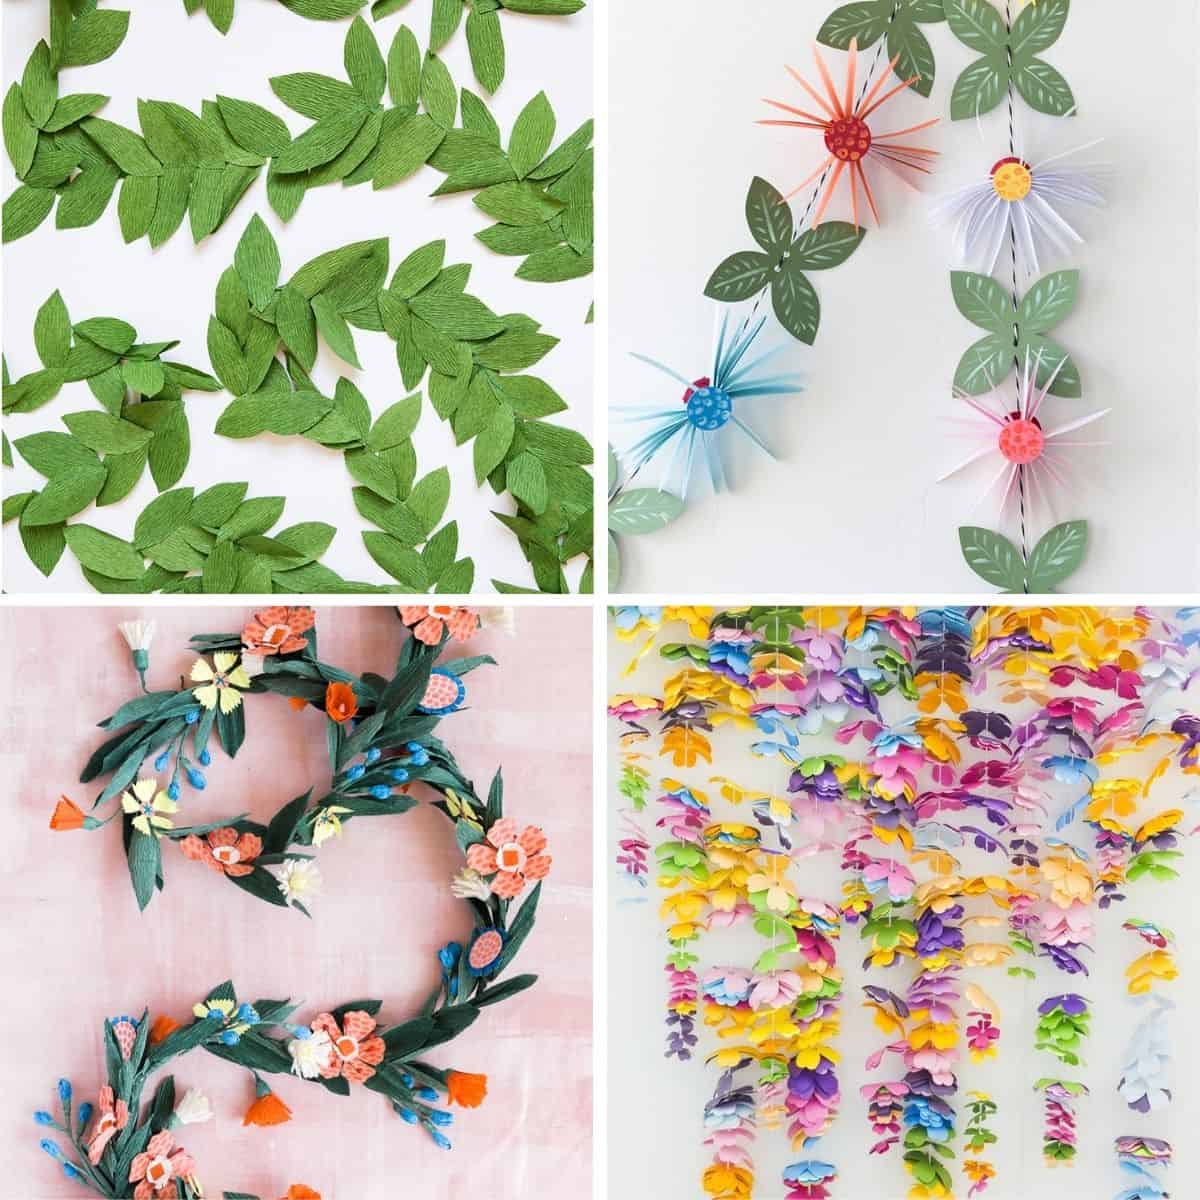 DIY Crepe Paper Crafts: 20 Tutorials to Inspire Your Creativity